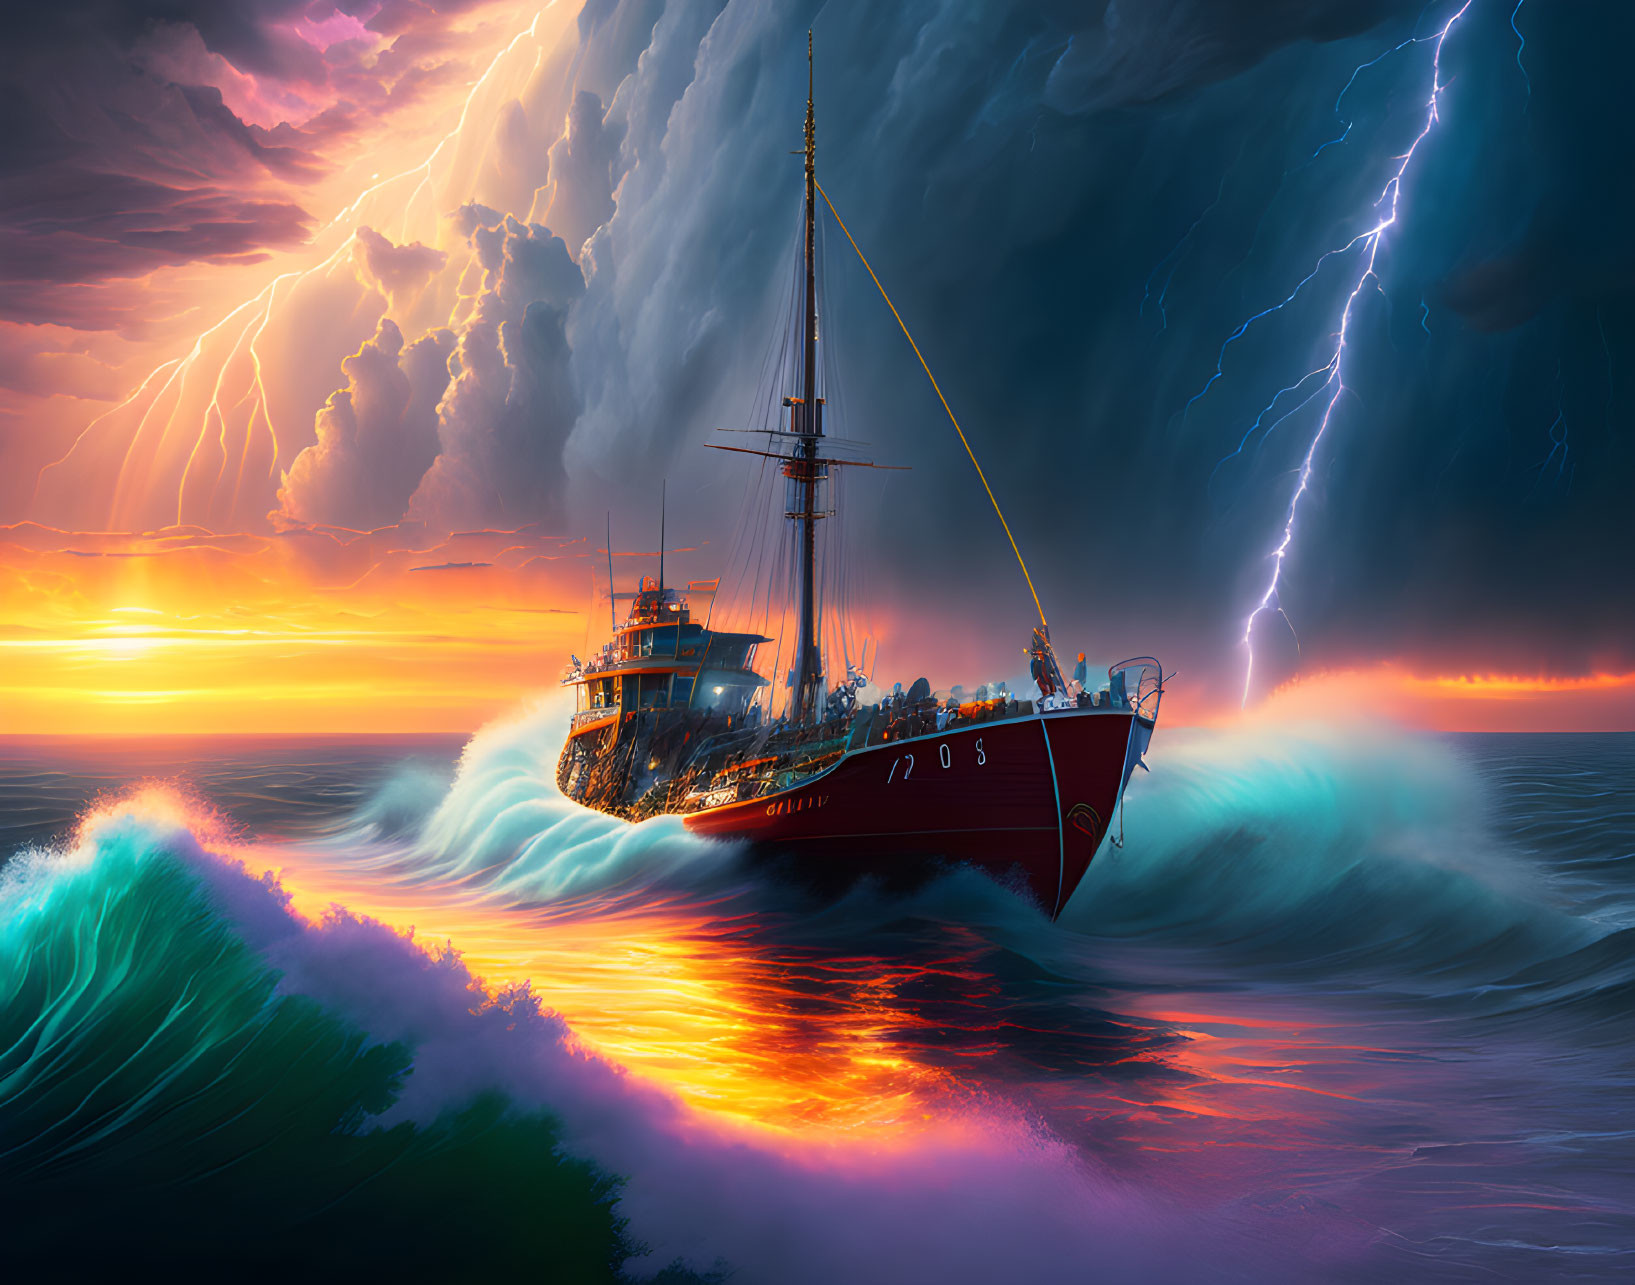 Sailing ship in vibrant ocean under dramatic sky